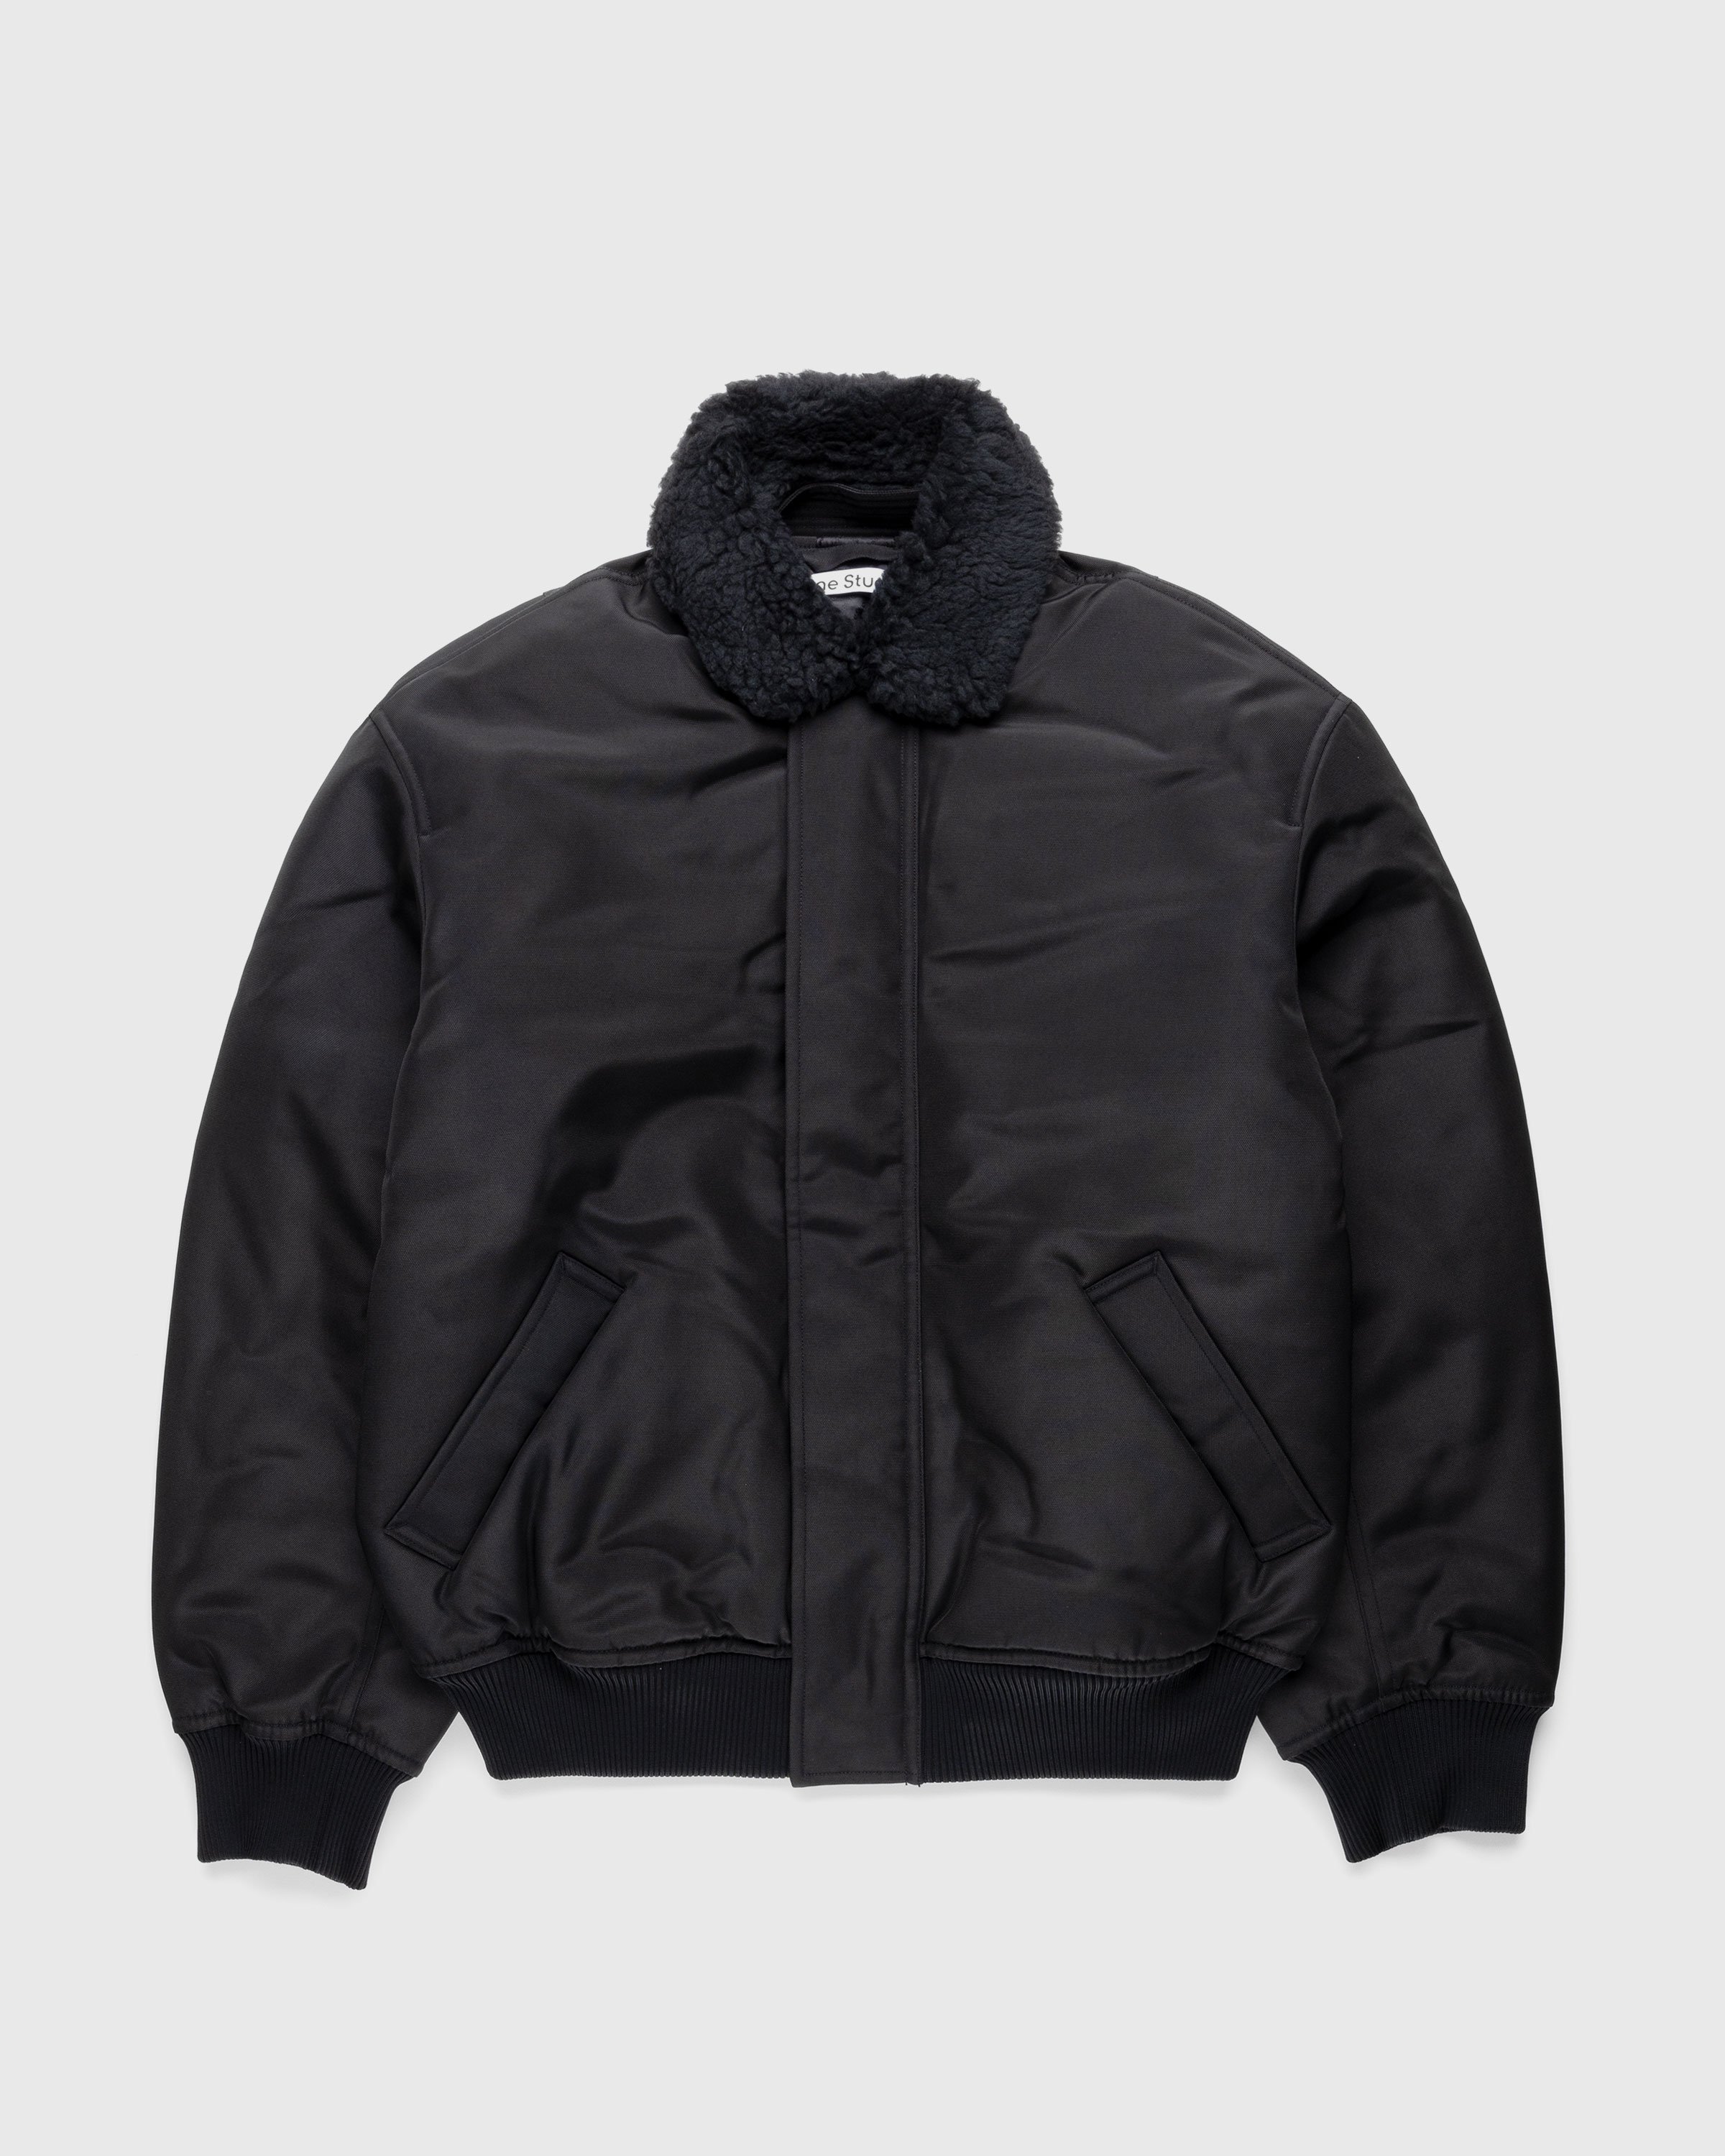 Acne Studios - Shearling Collar Jacket Black - Clothing - Black - Image 1